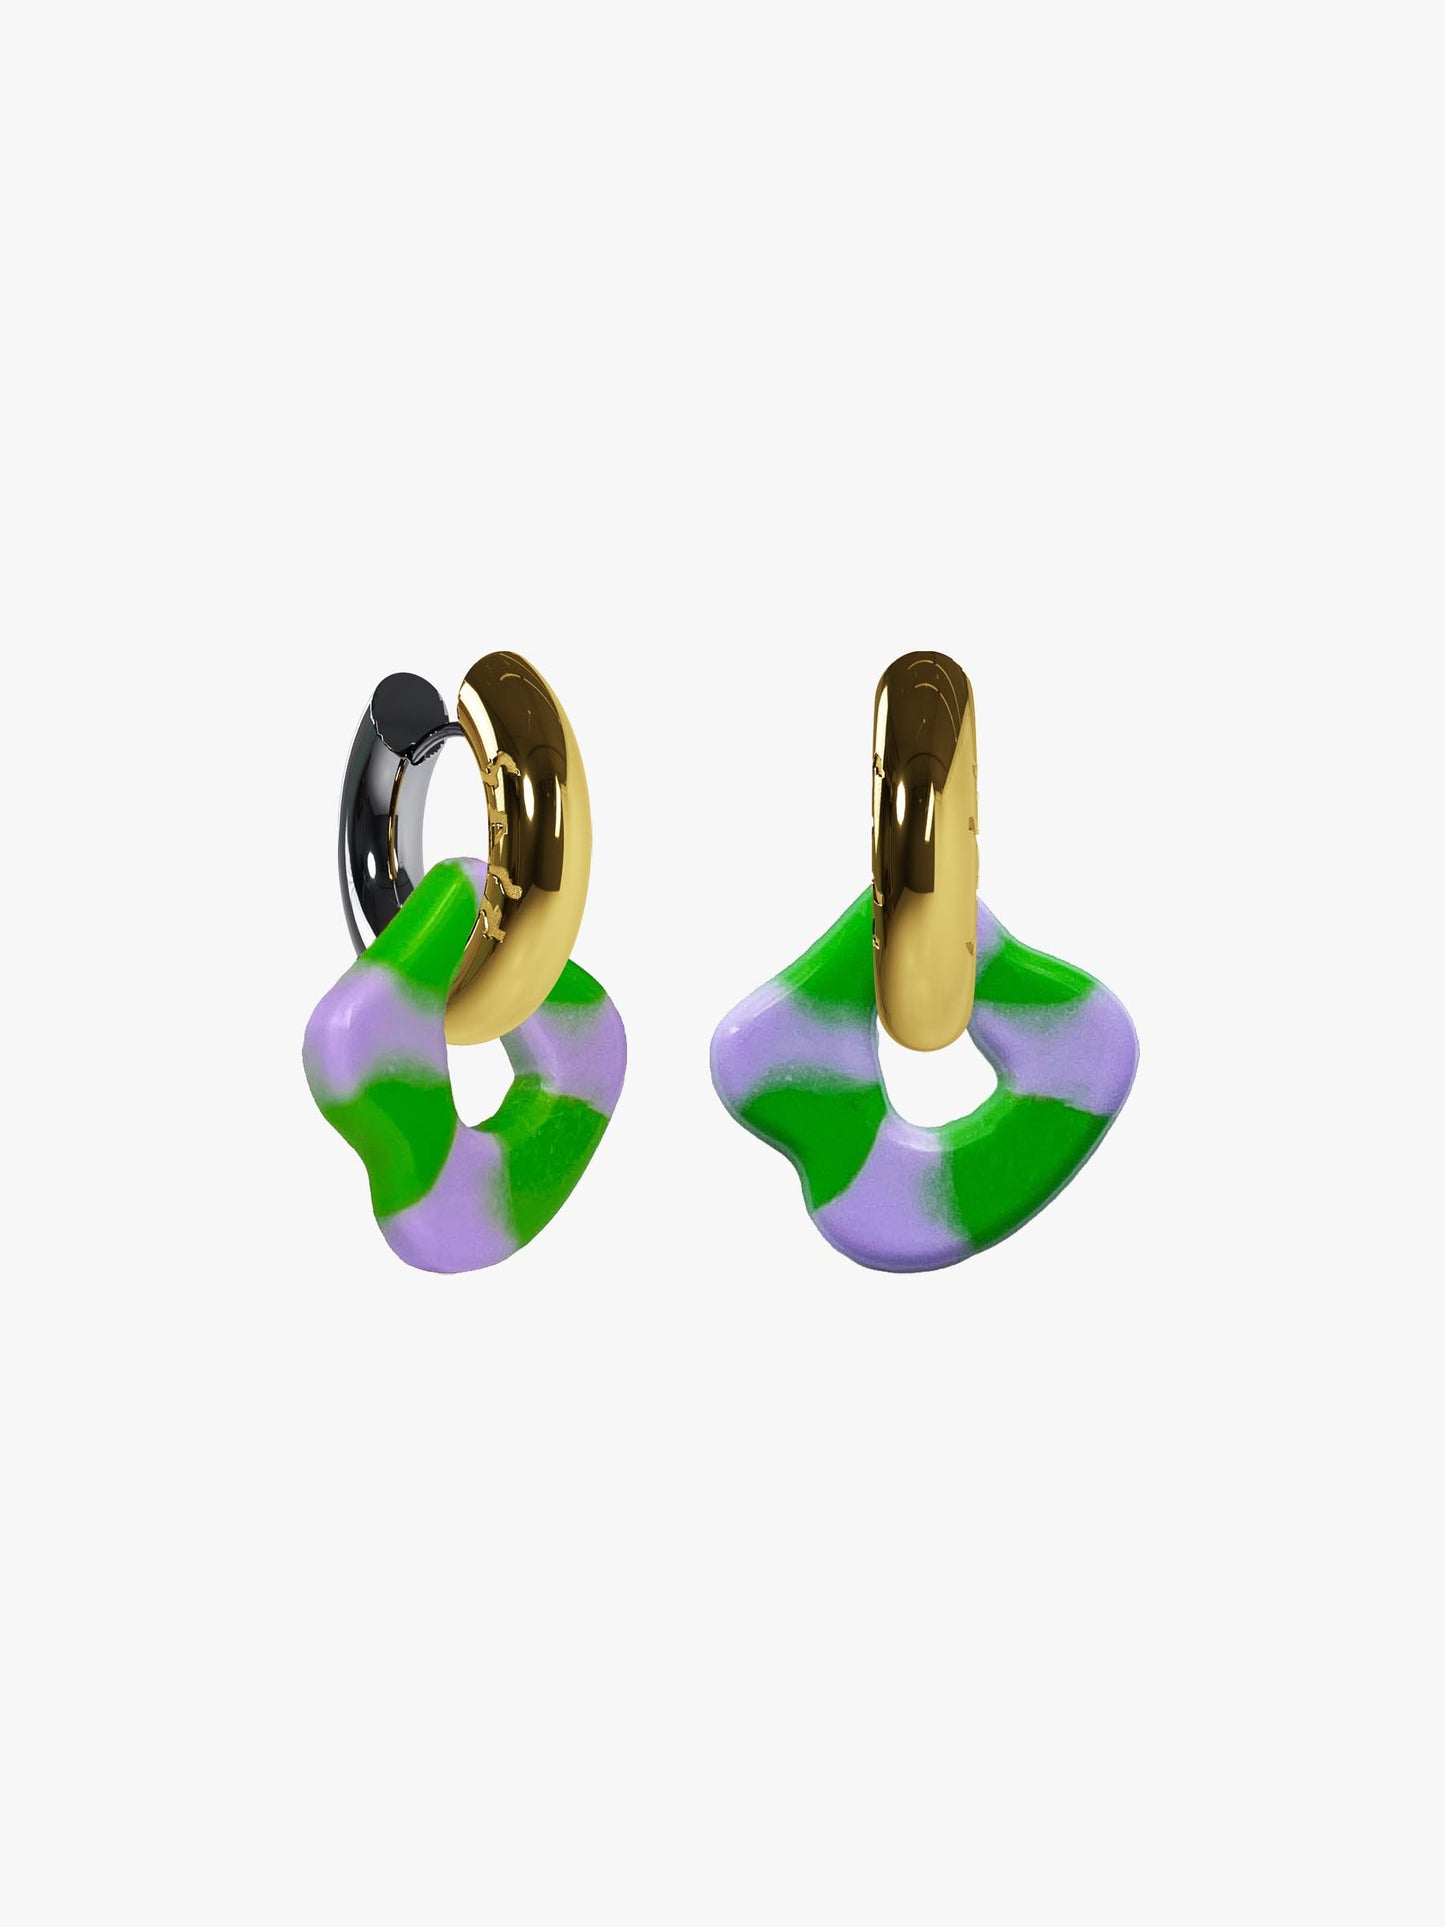 Sol lilac green duo earring (pair)